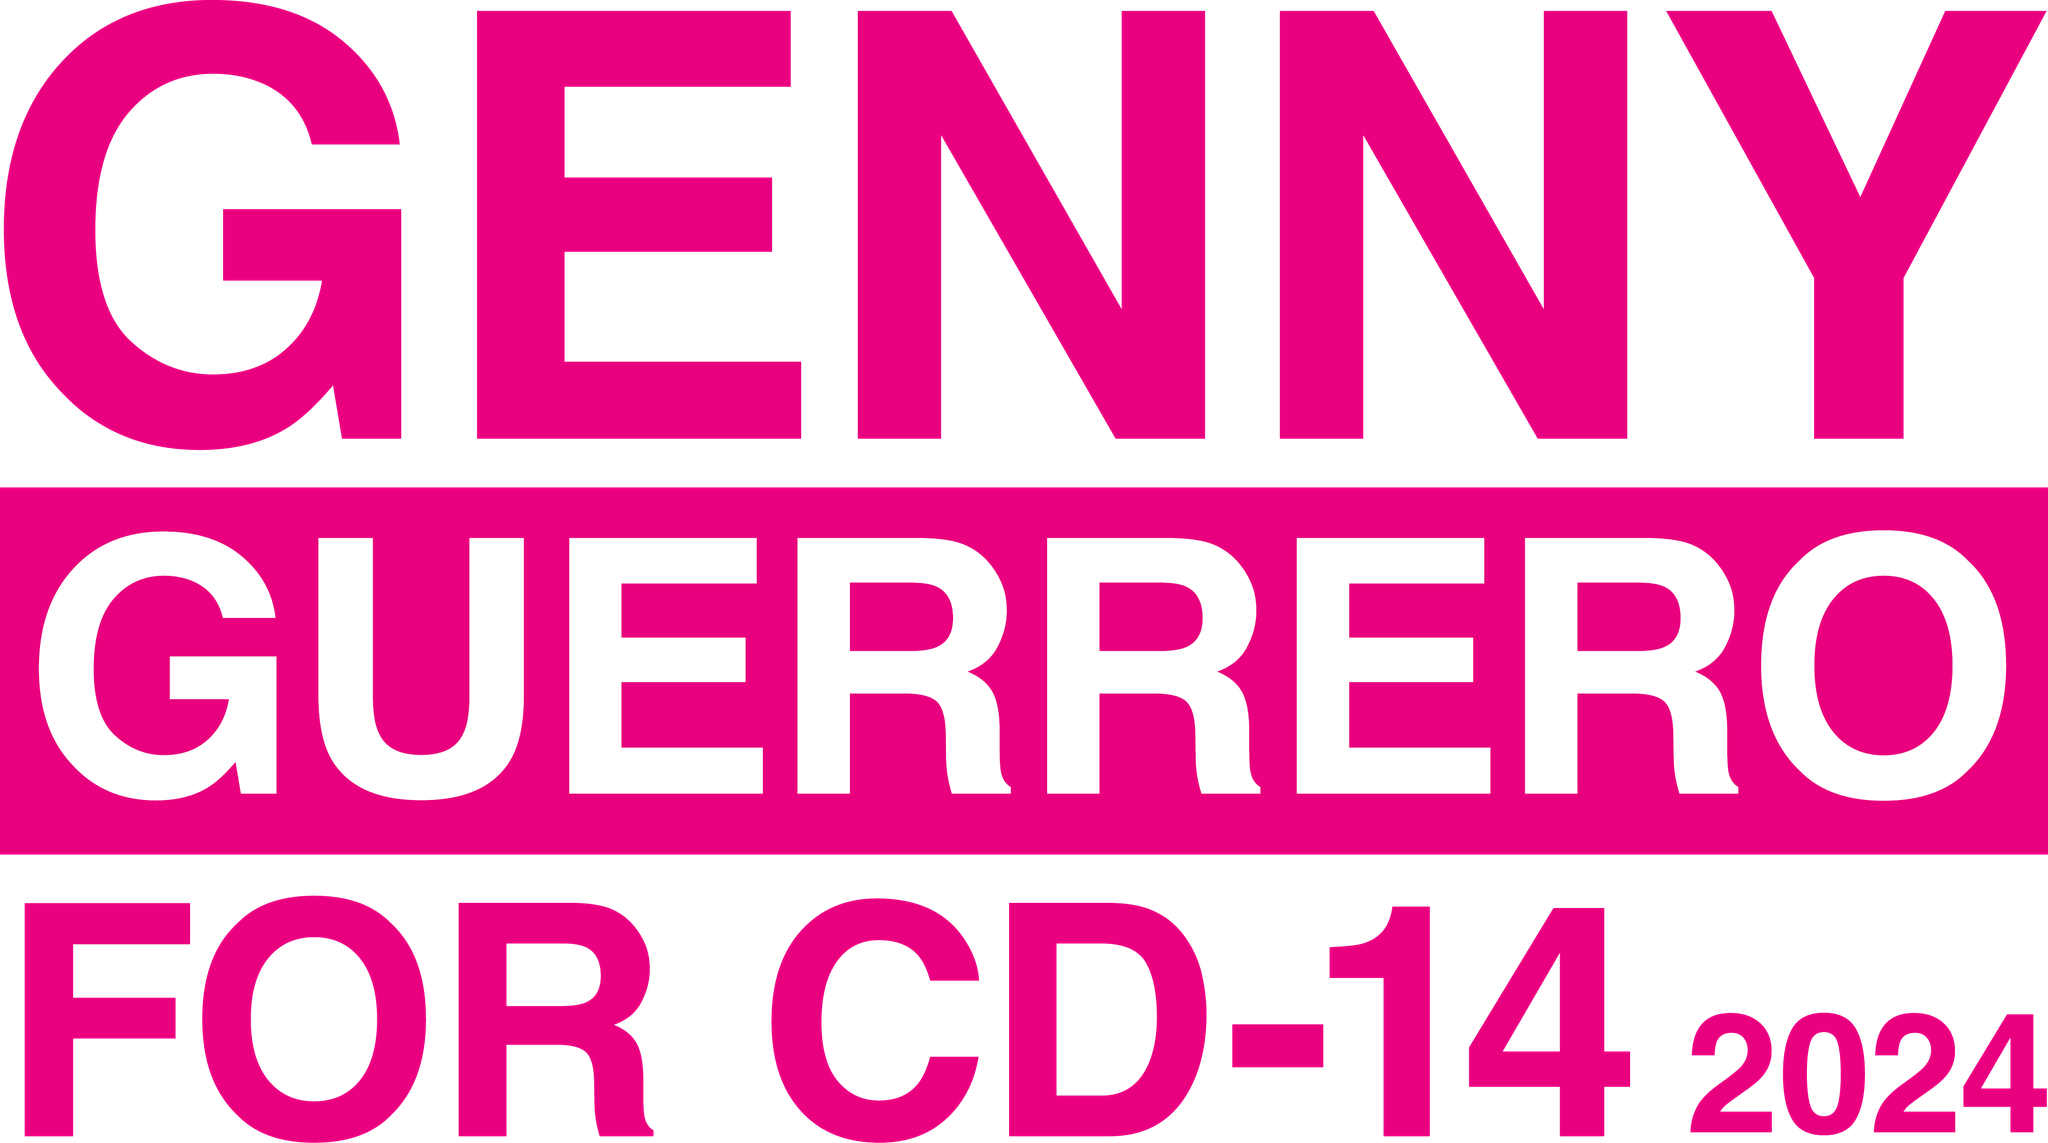 Genny Guerrero for City Council District 14, 2024